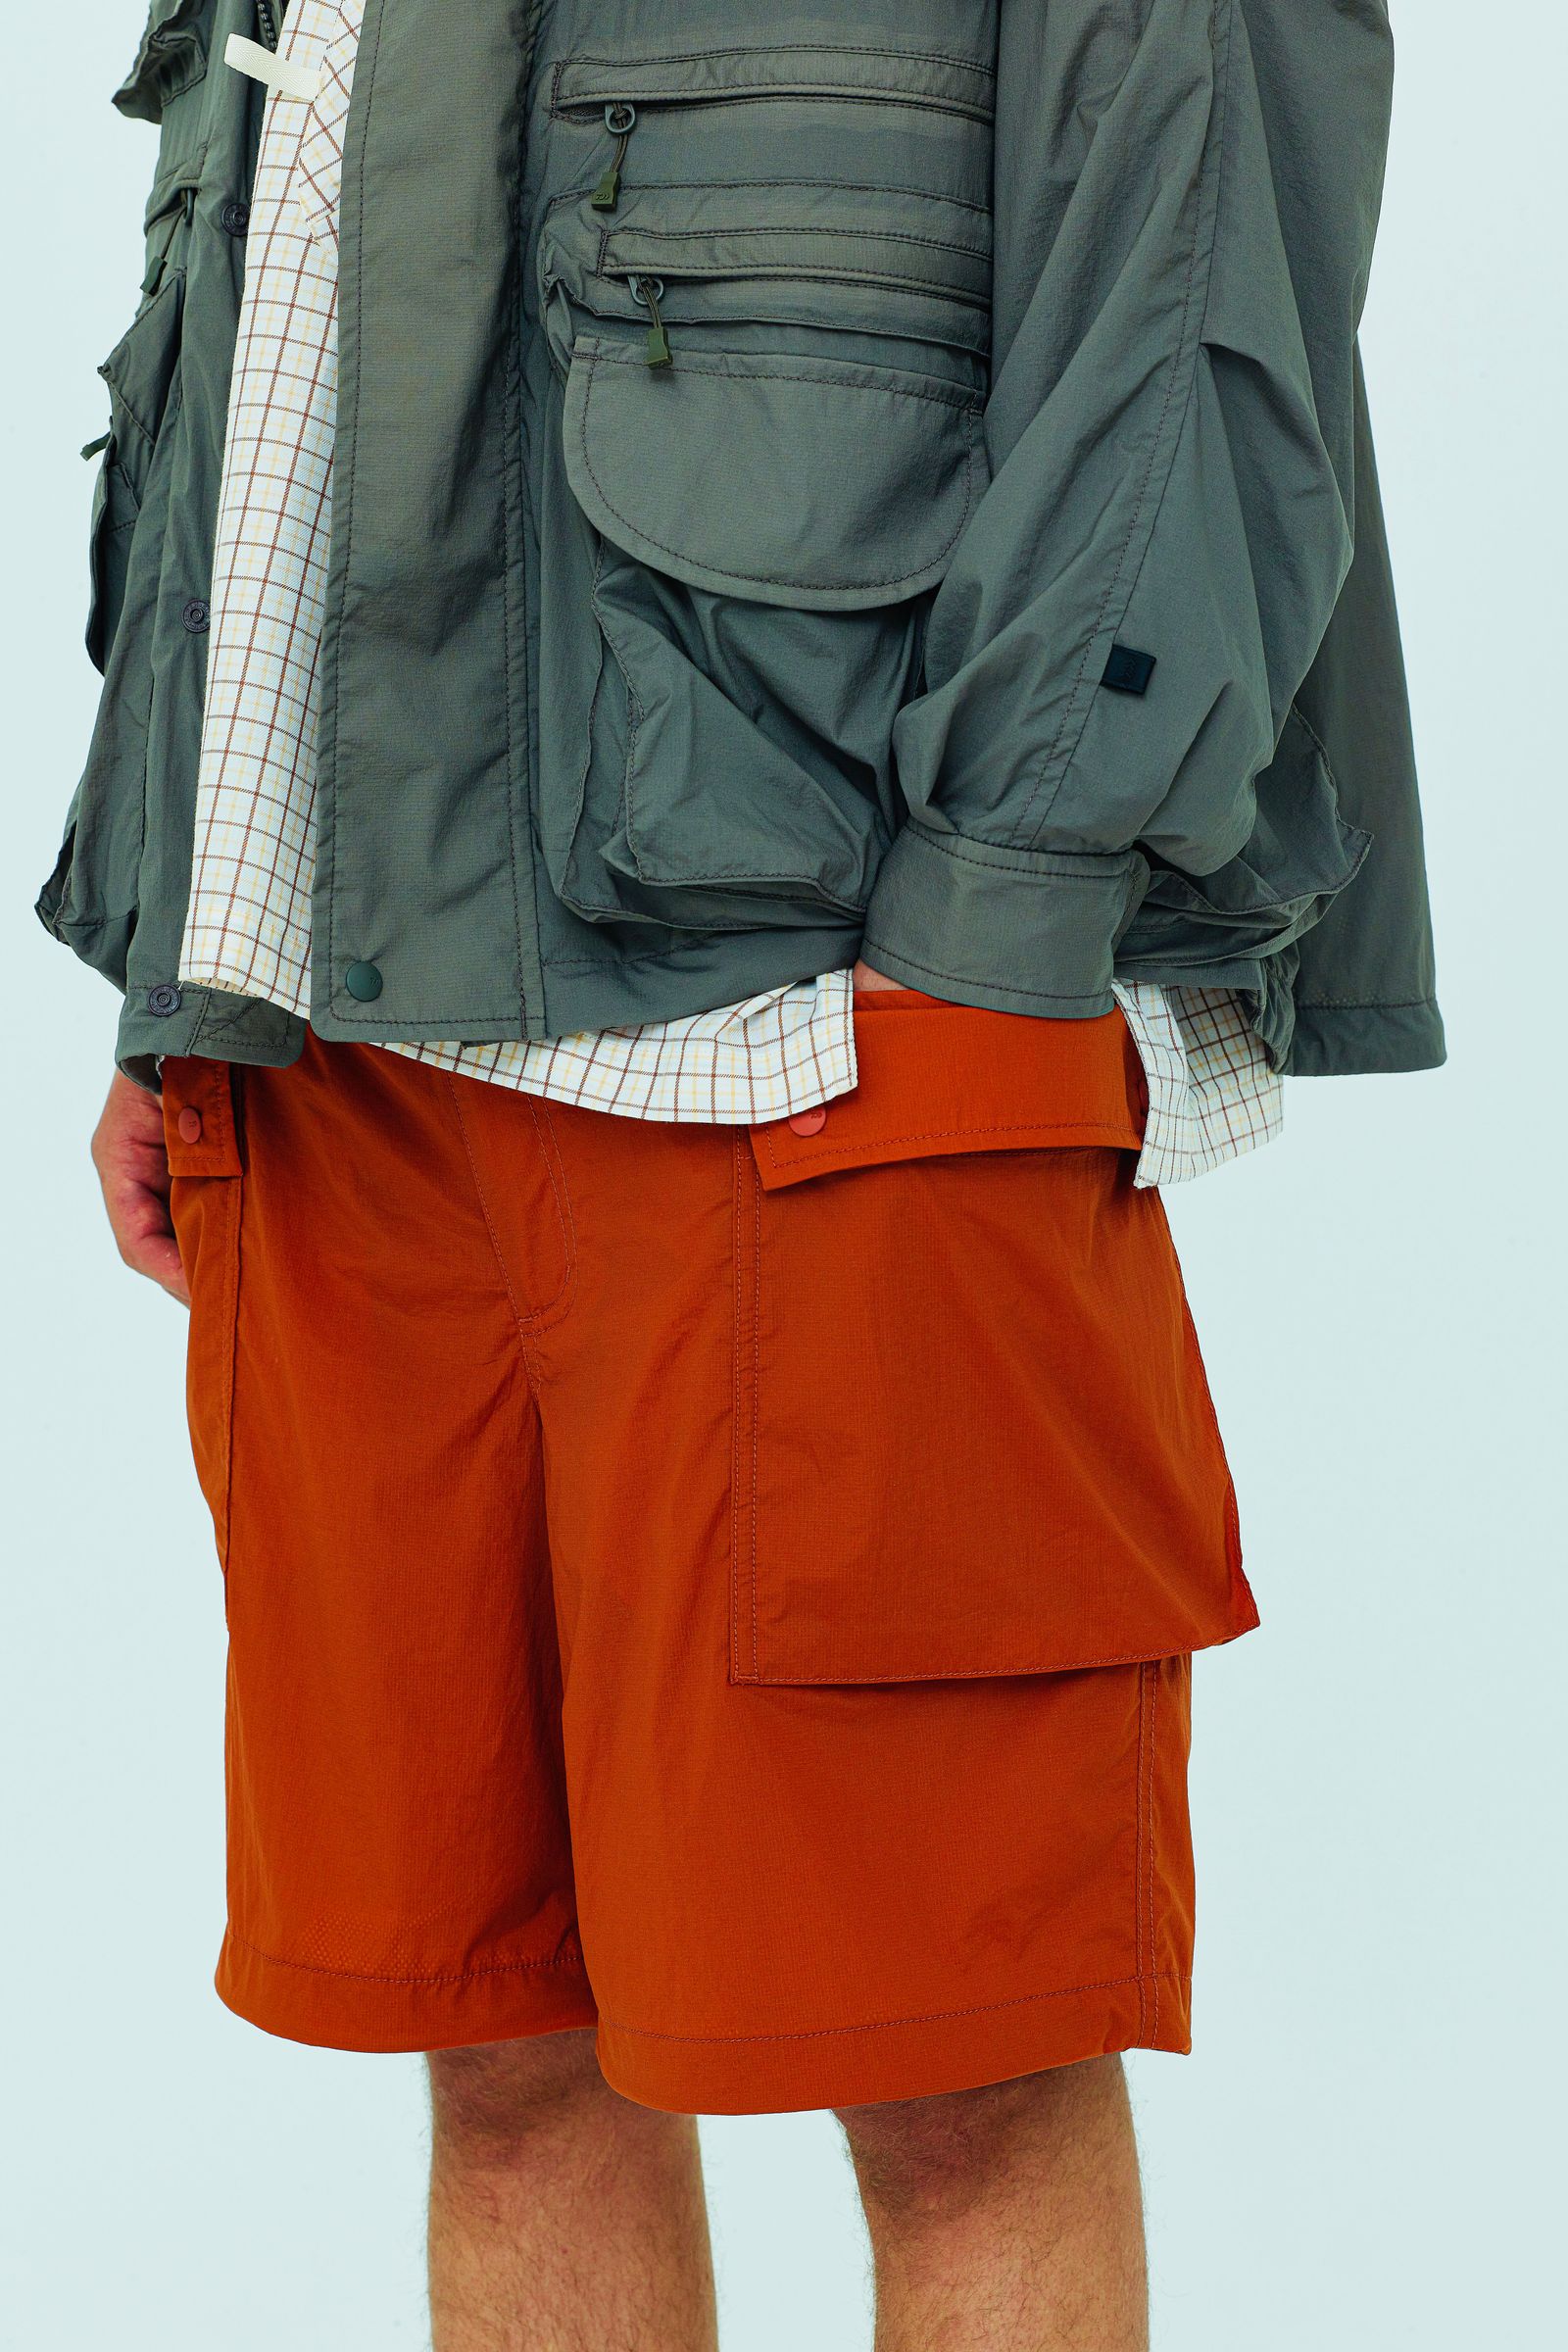 DAIWA PIER39 - tech mil marine corp shorts -dark orange- 23ss men